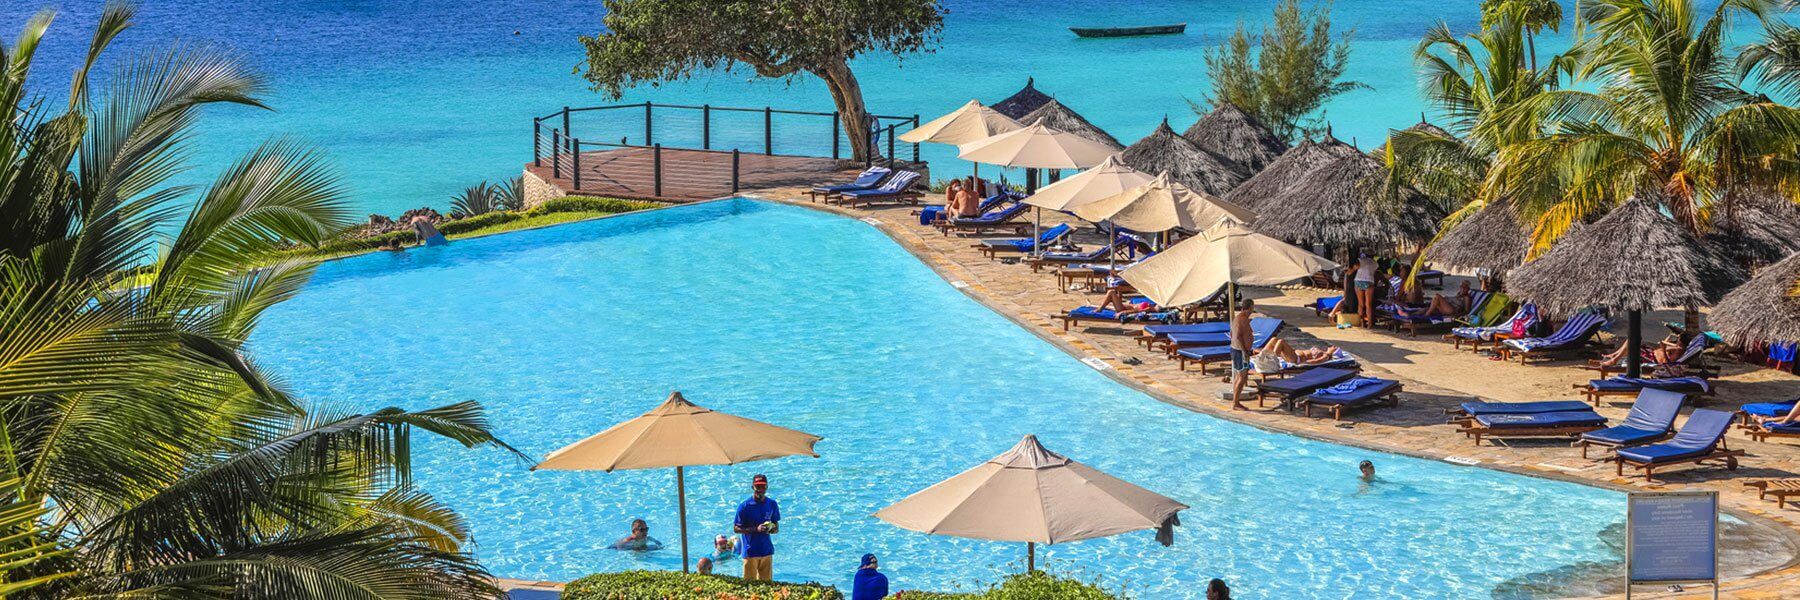 Zanzibar Beach Hotel Amenities 